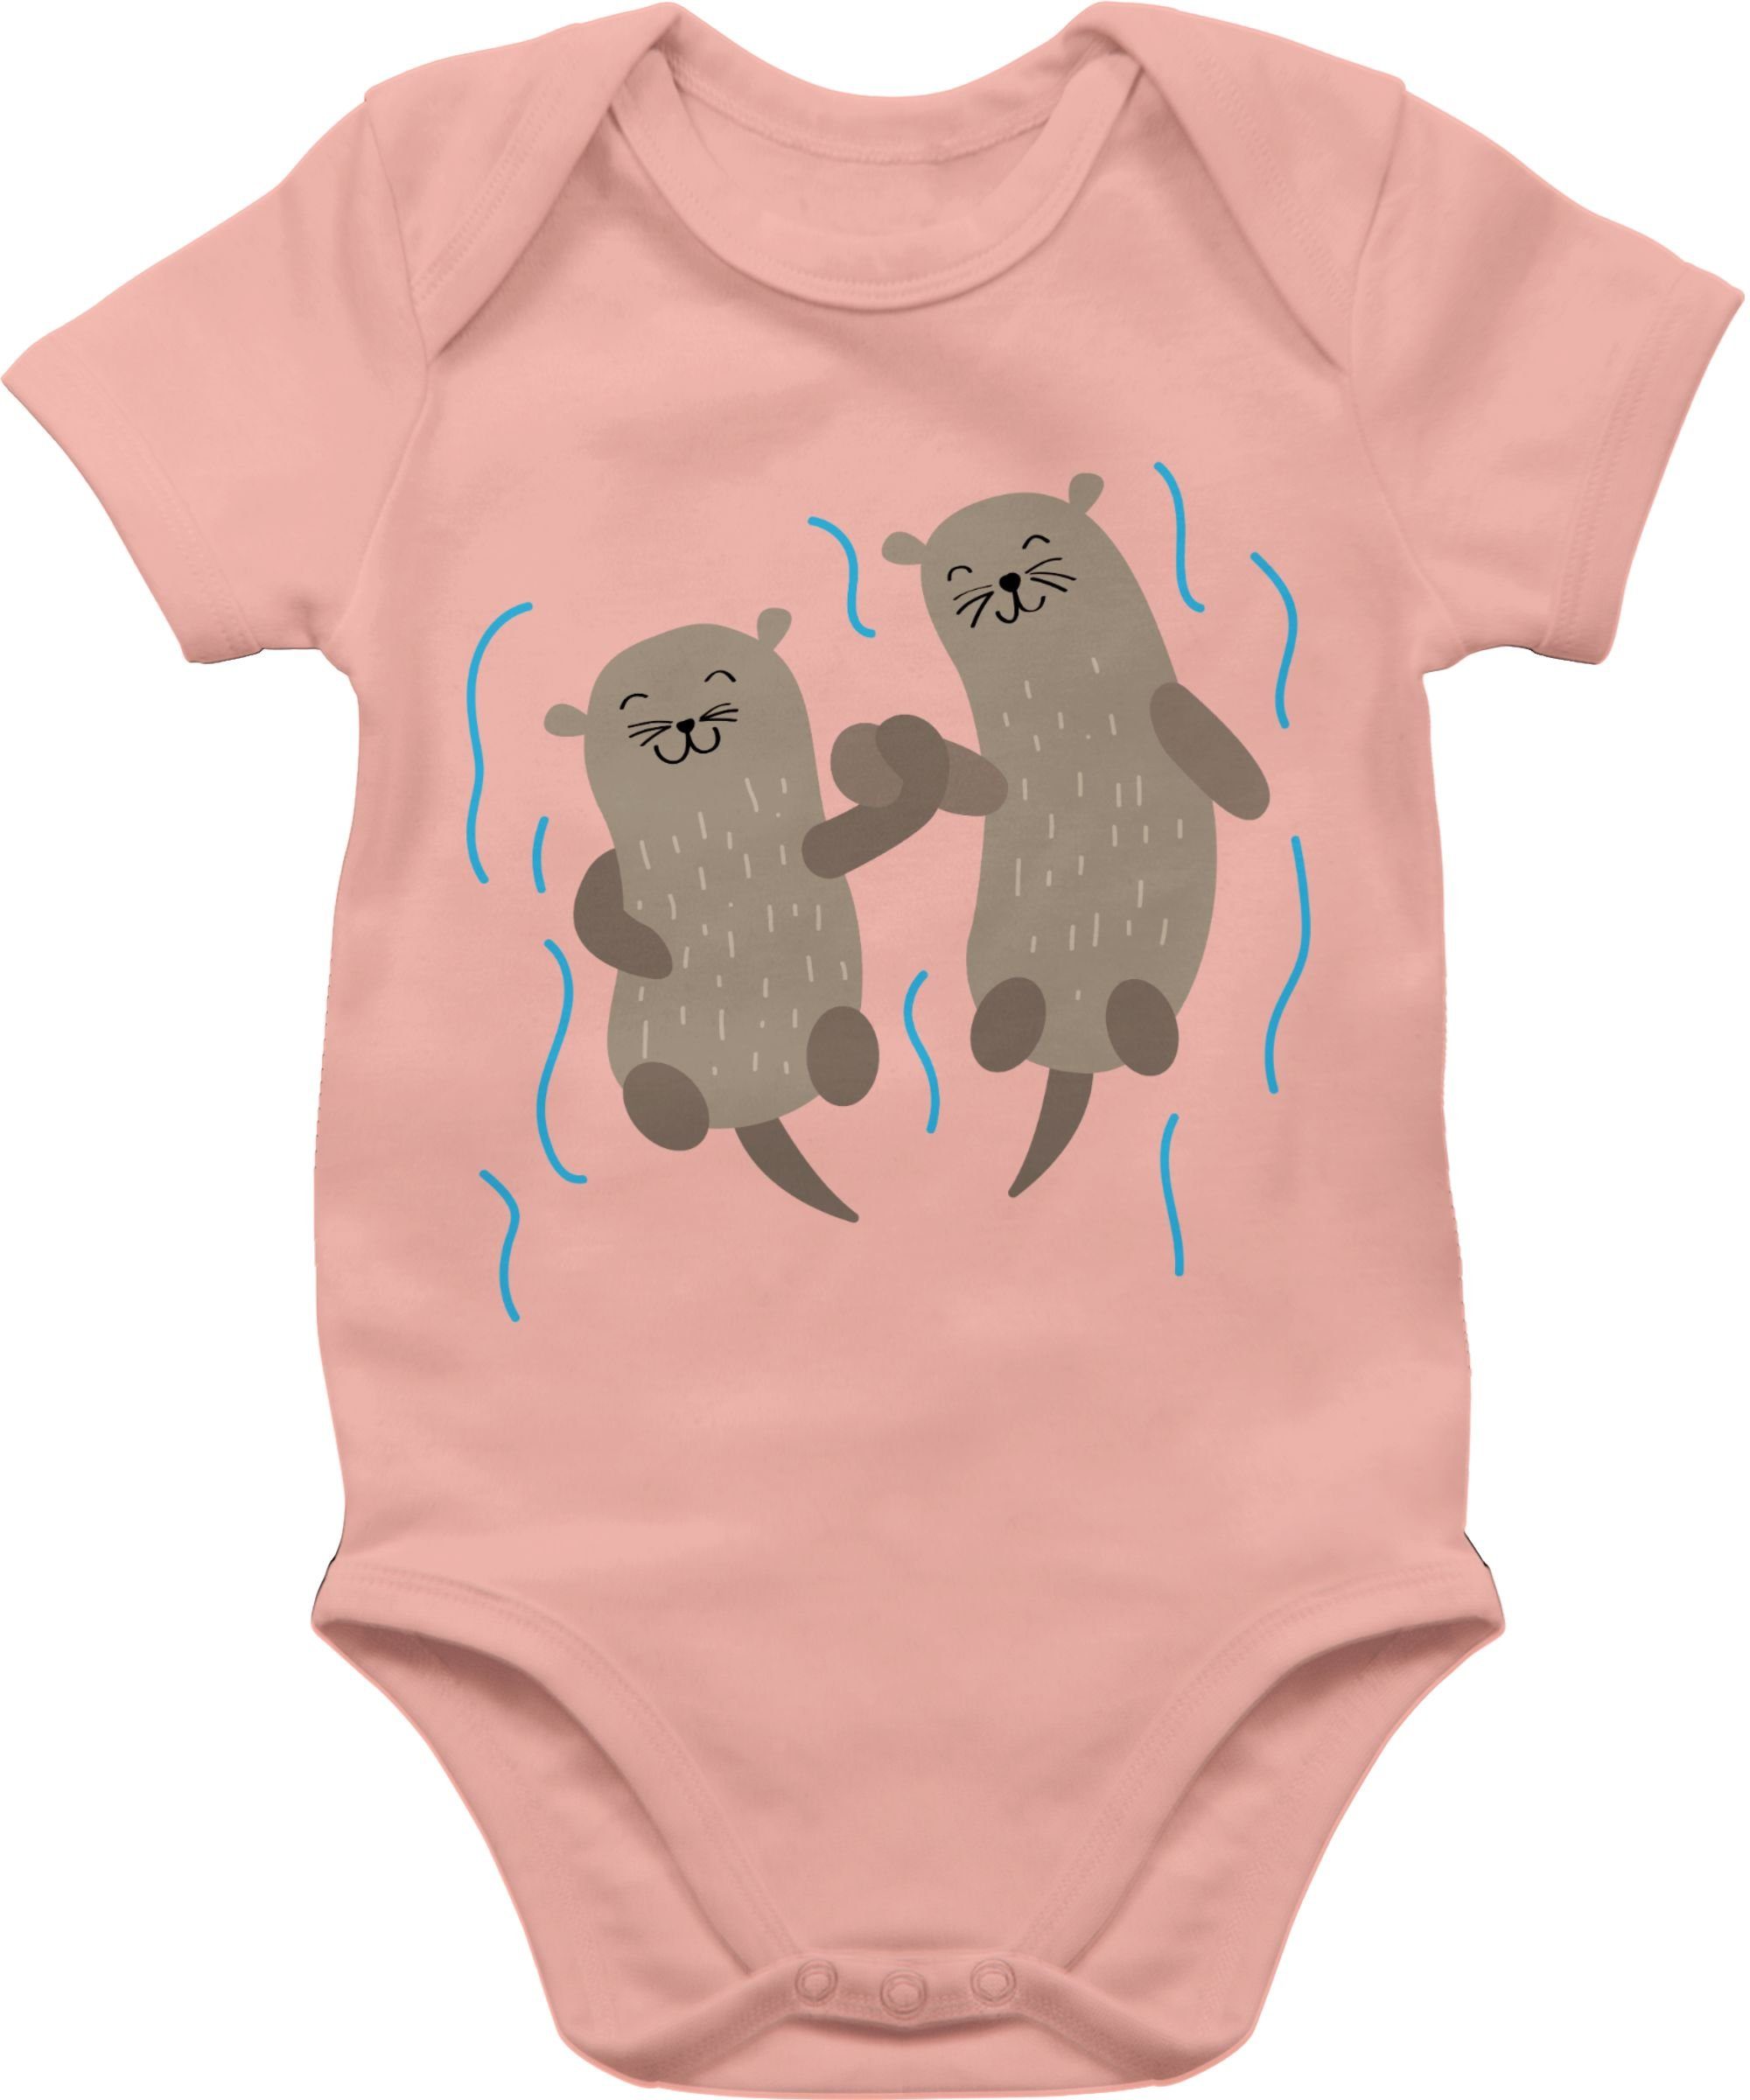 Shirtracer Shirtbody Süße Otter - Tiermotiv Animal Print Baby - Baby Body  Kurzarm body baby junge spruch - otter geschenke - bodys kurzarm